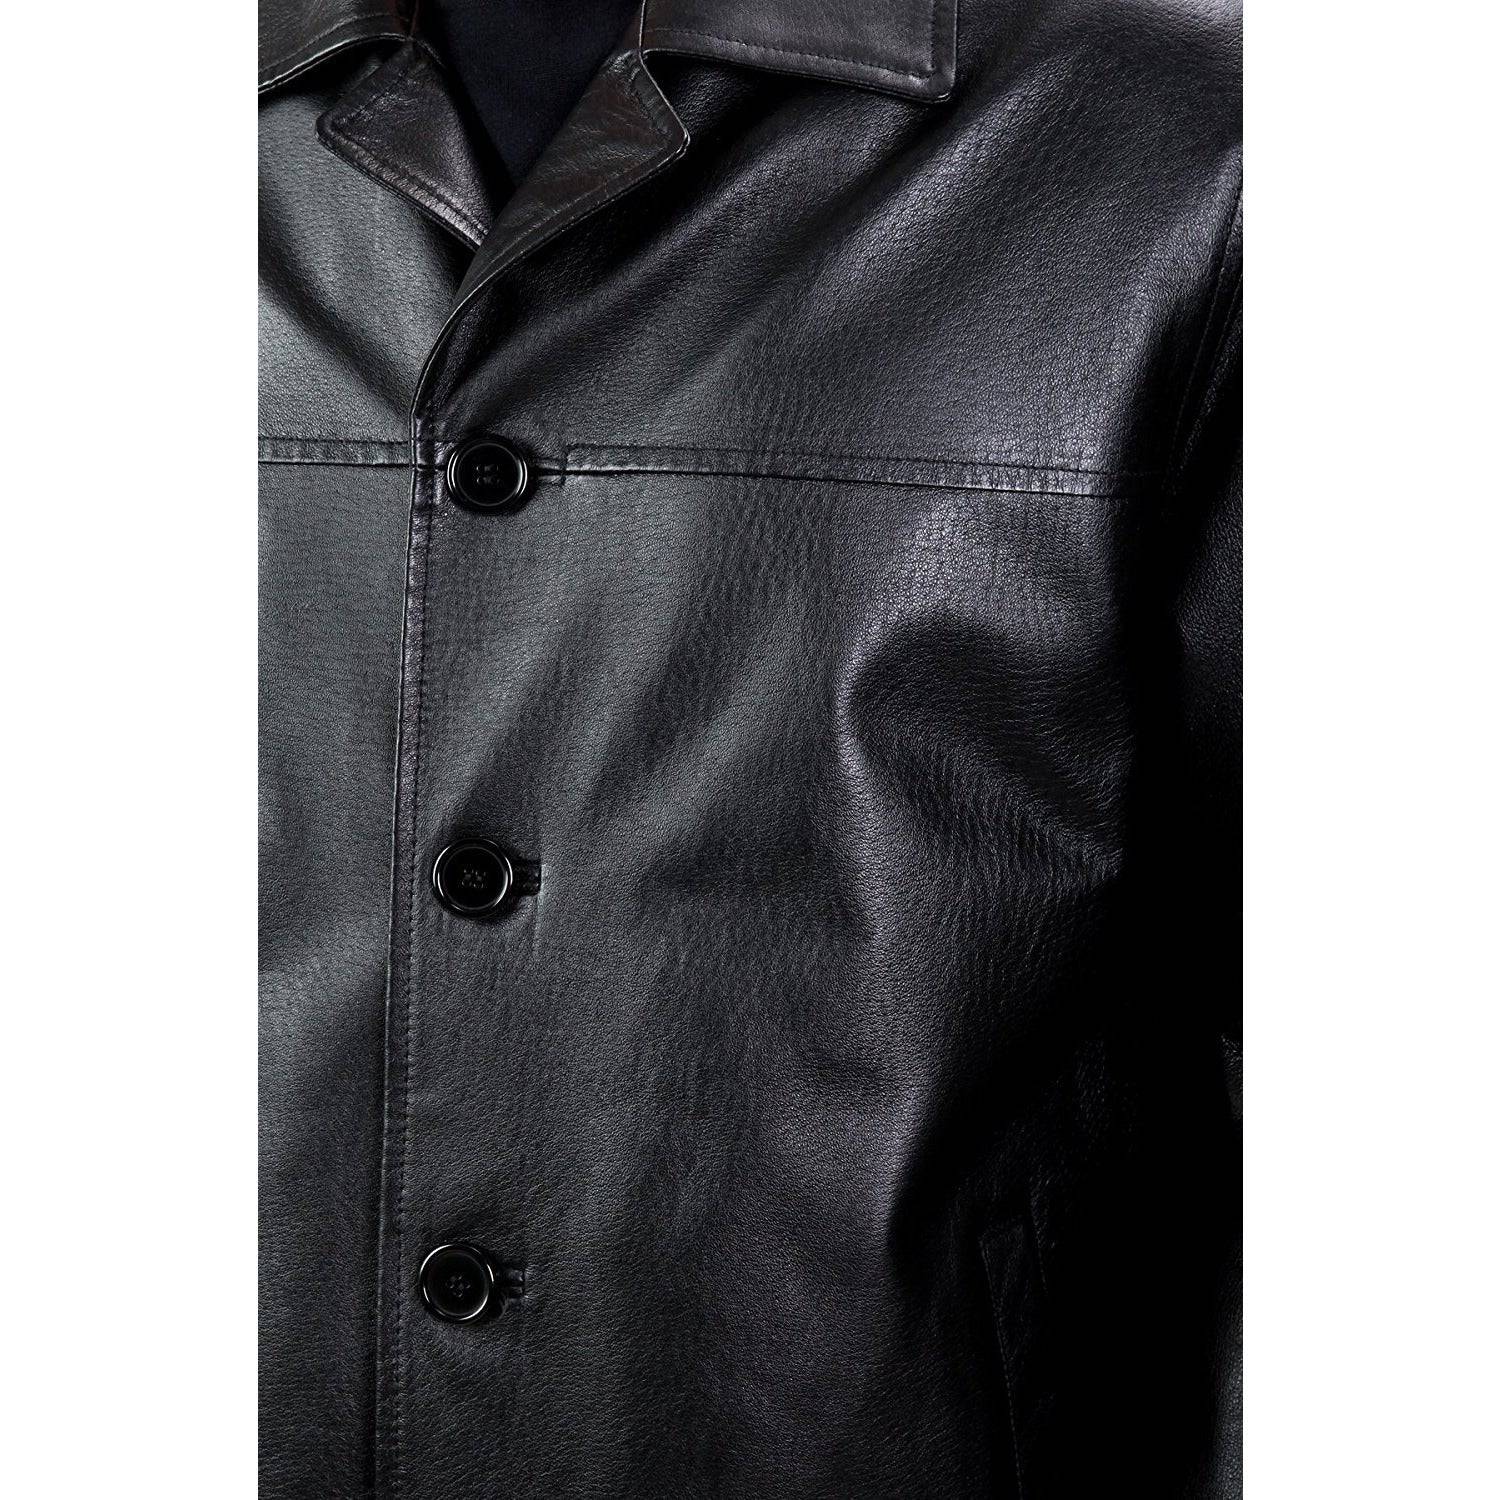 Ramonti Mens Classic Black Leather Car Coat